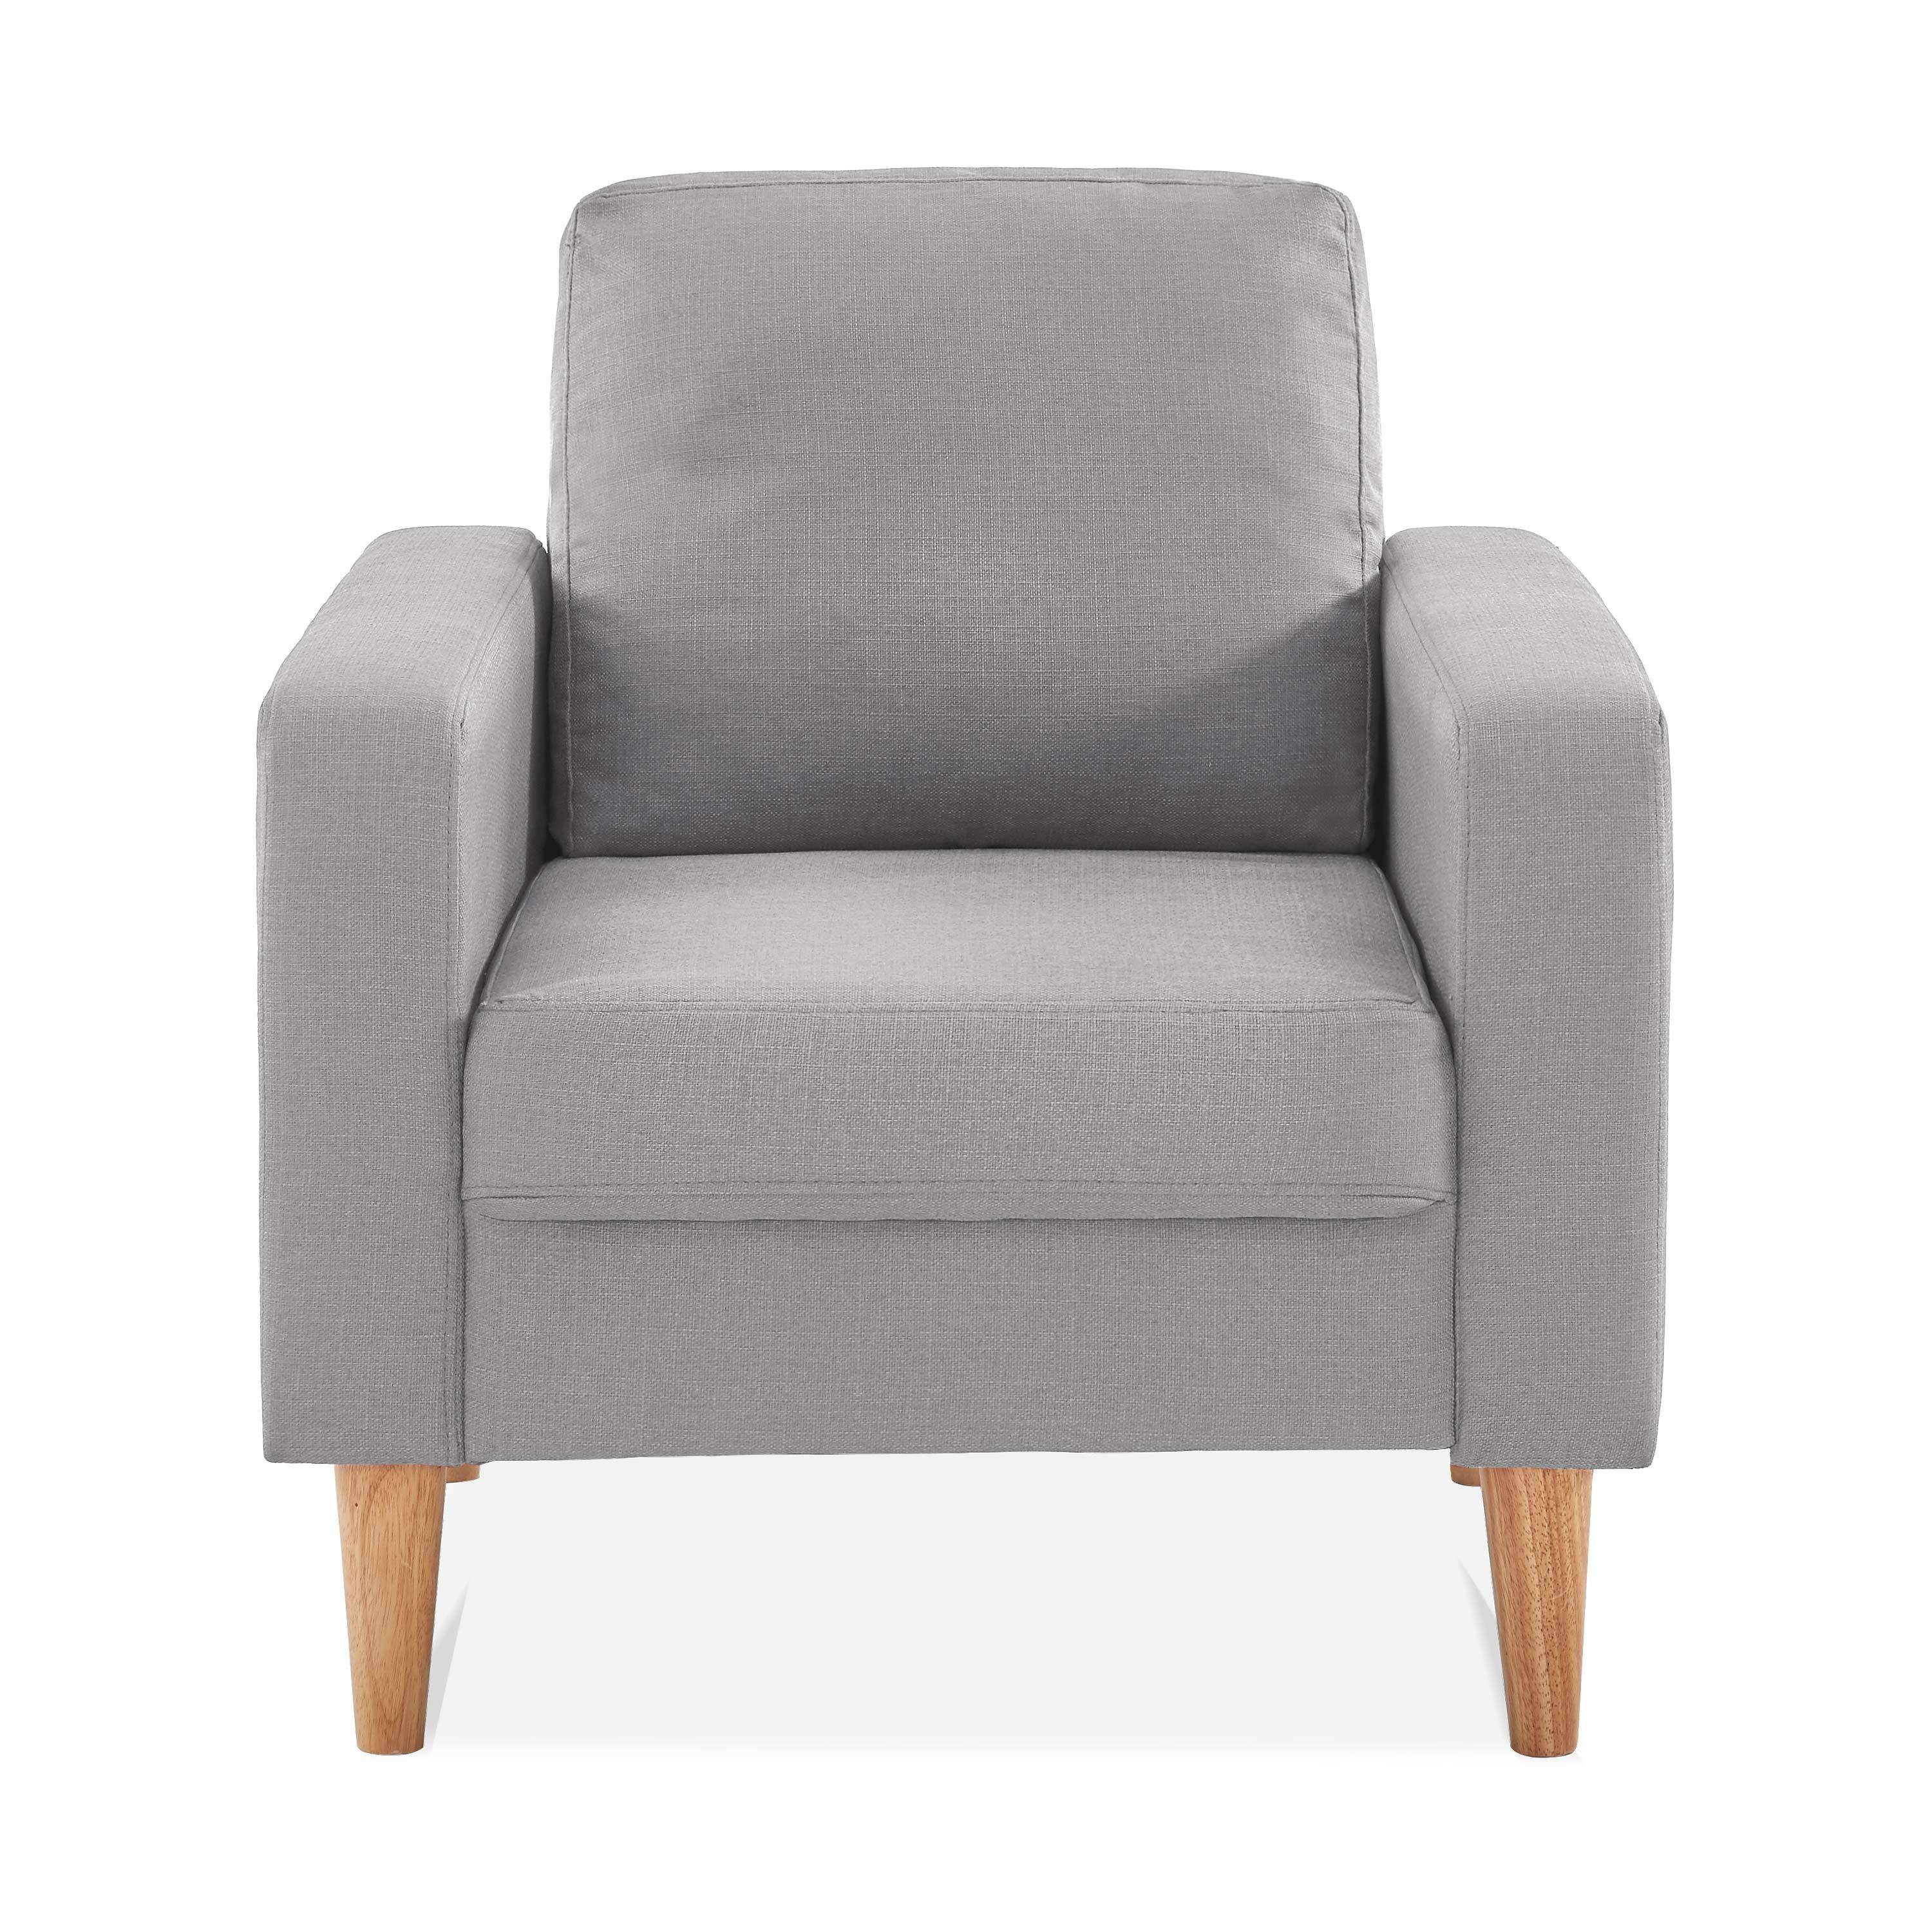 Scandi-style armchair with wooden legs - Bjorn - Light Grey Photo3